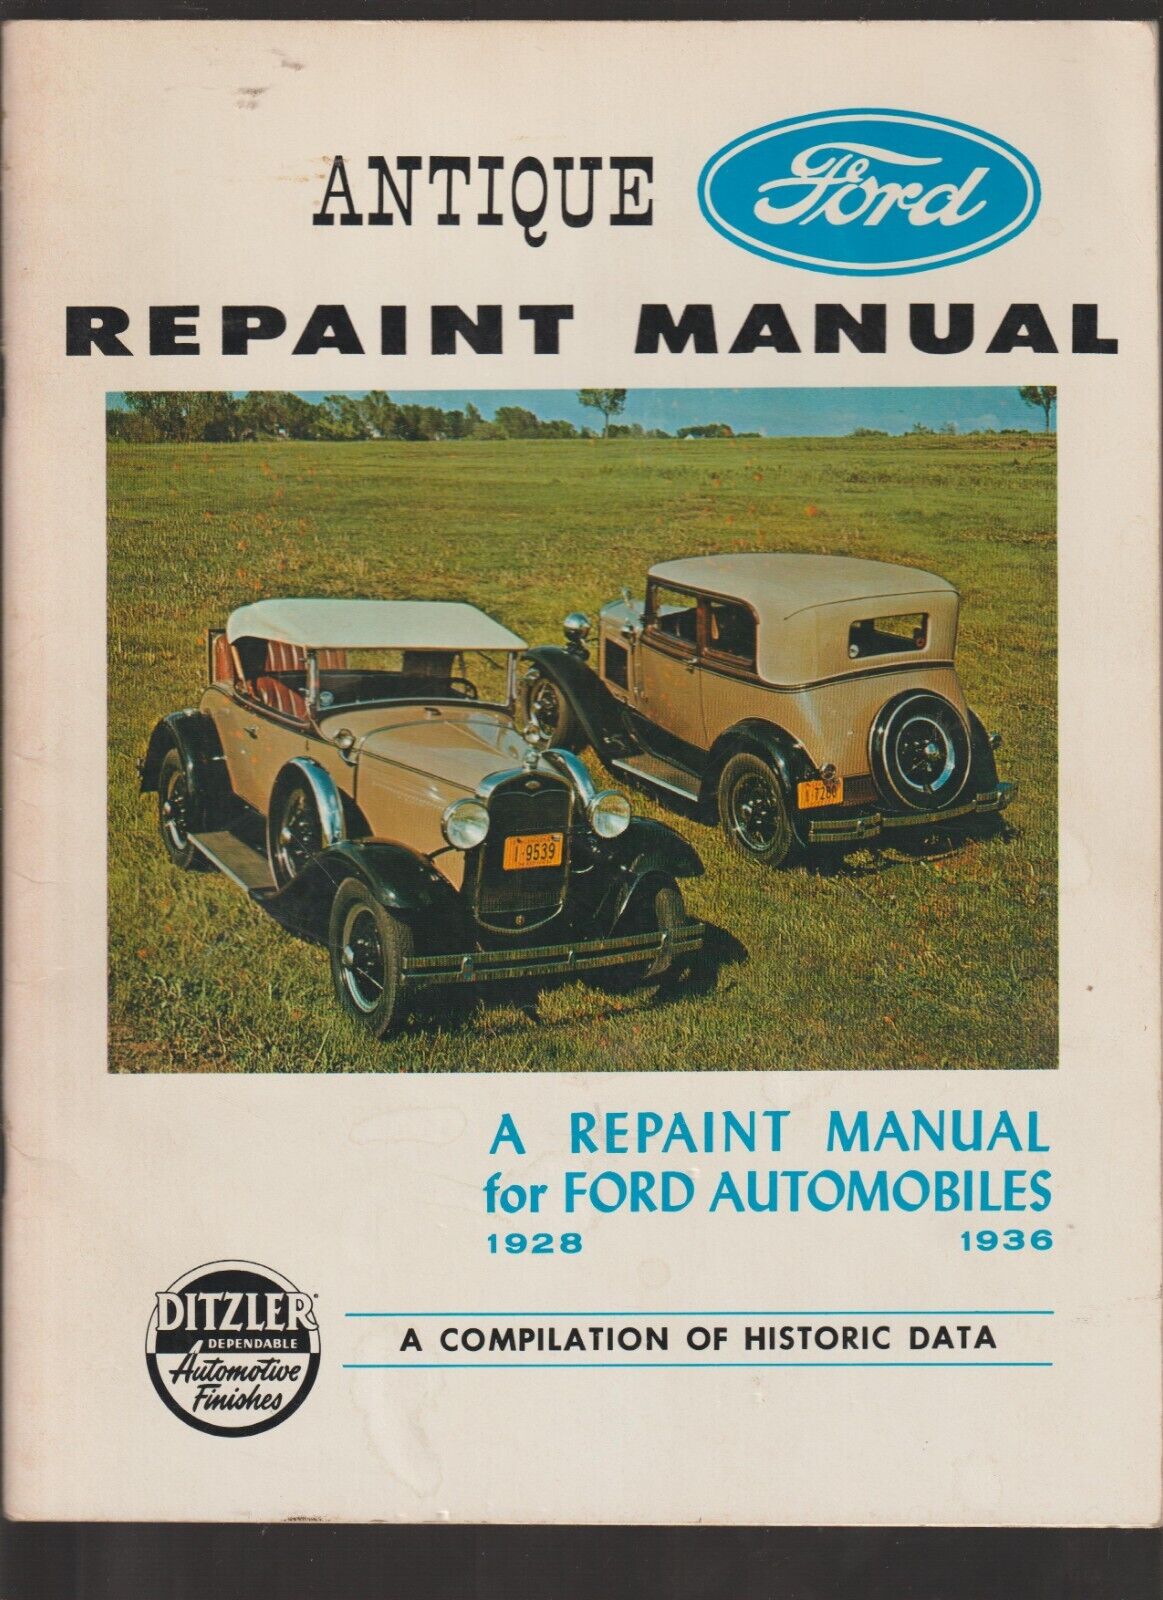 FORD AUTOMOBILES Repaint Manual for Antique 1928 - 1936 W/Ditzler Paint Chart